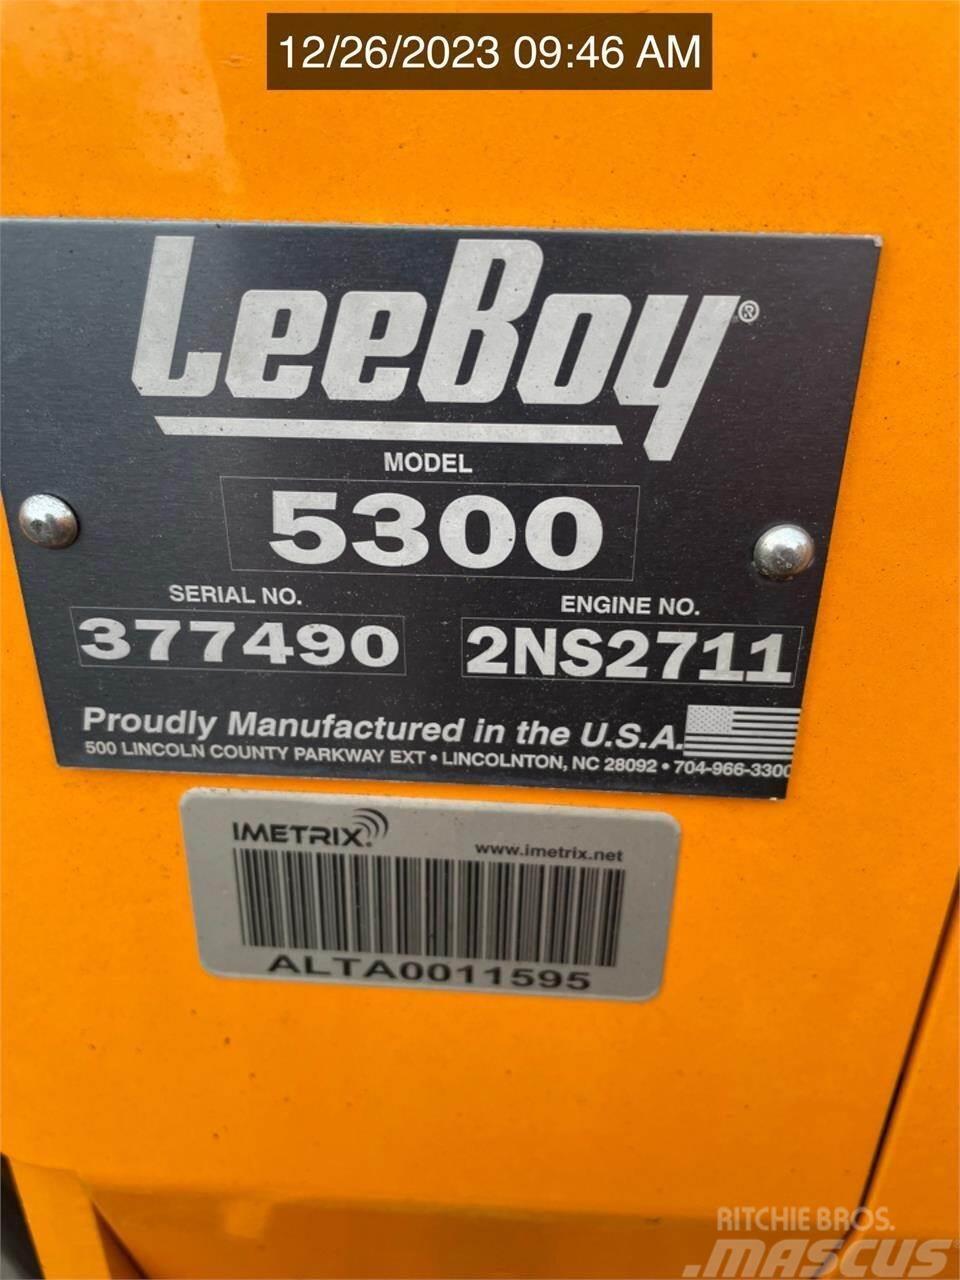 LeeBoy 5300 Strassenfertiger